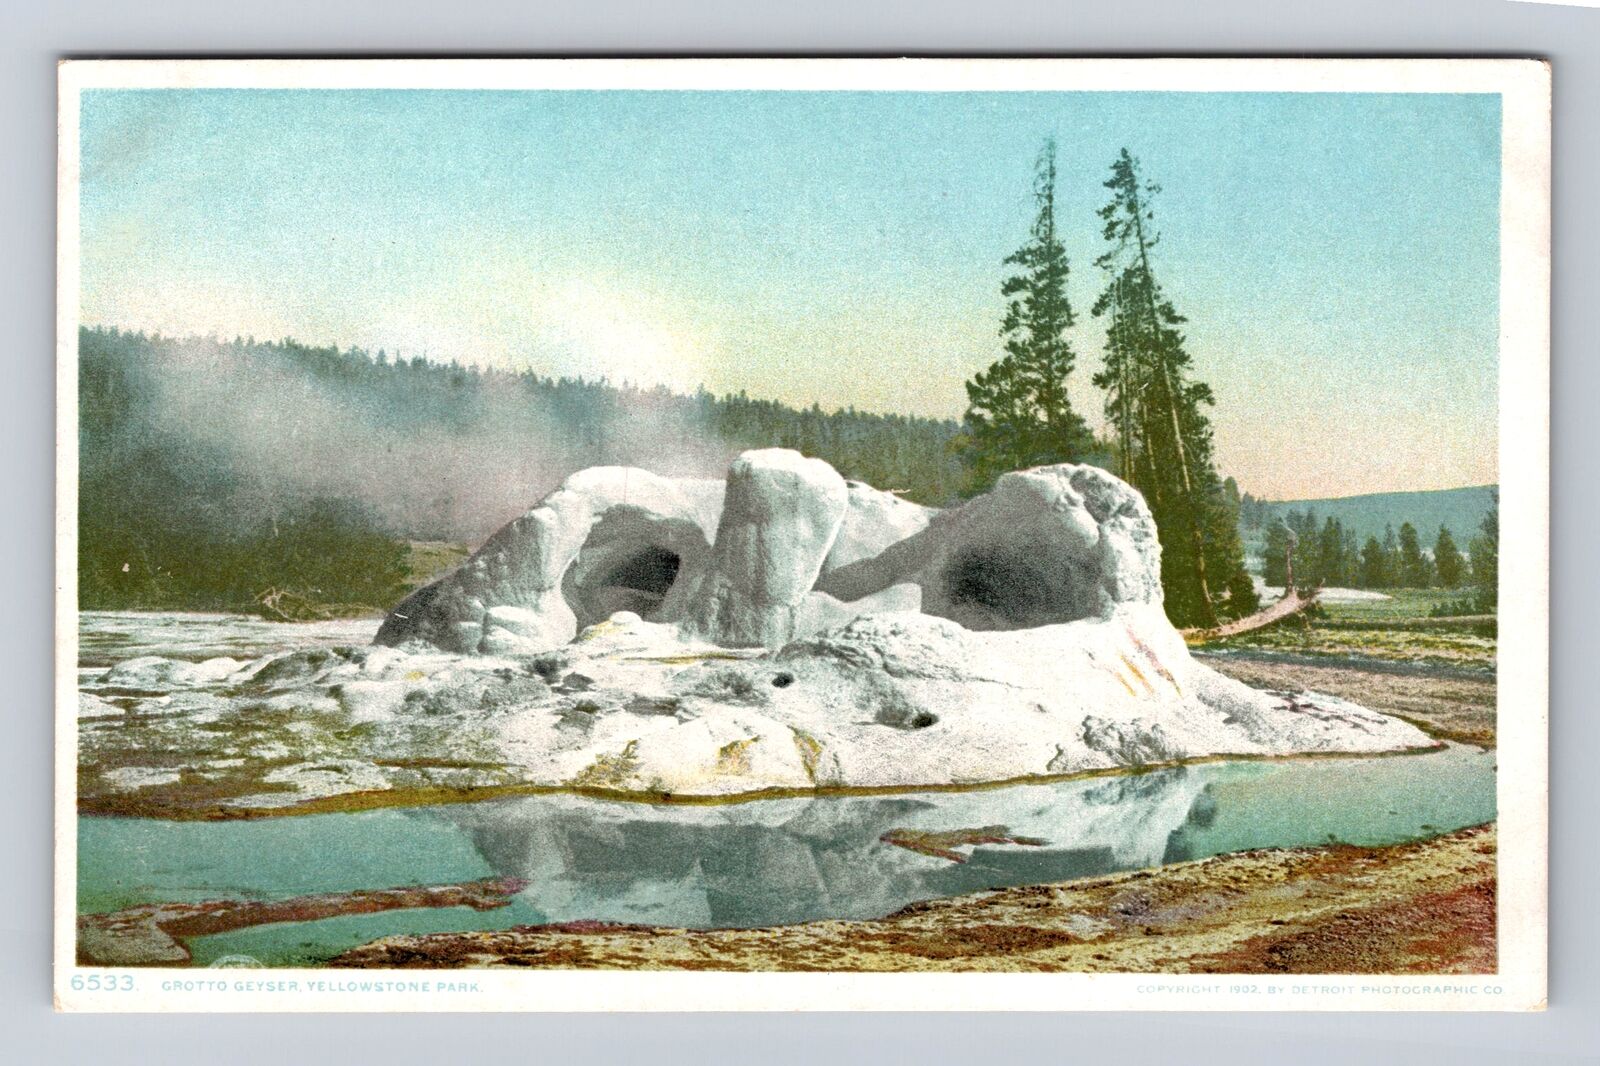 Yellowstone National Park-Grotto Geyser, Antique Vintage Souvenir Postcard